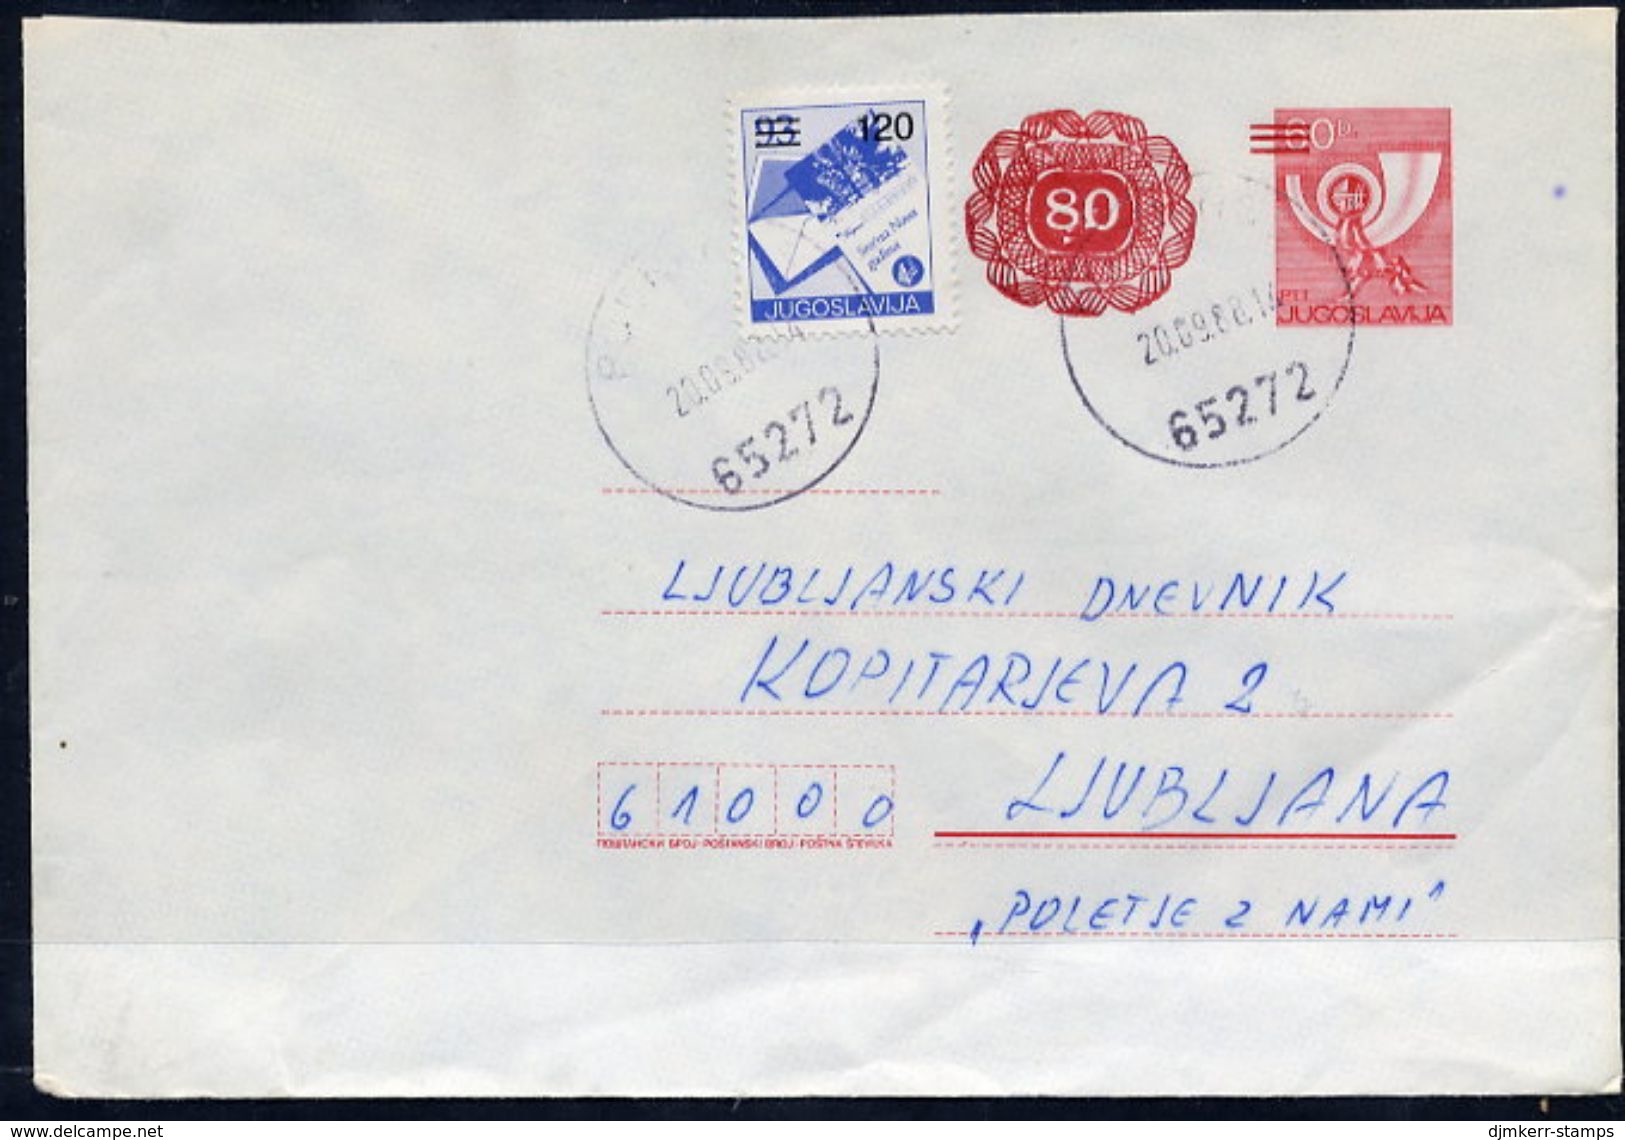 YUGOSLAVIA 1987 Posthorn 80/60 D.stationery Envelope  Used With Additional Franking.  Michel U78 - Postal Stationery